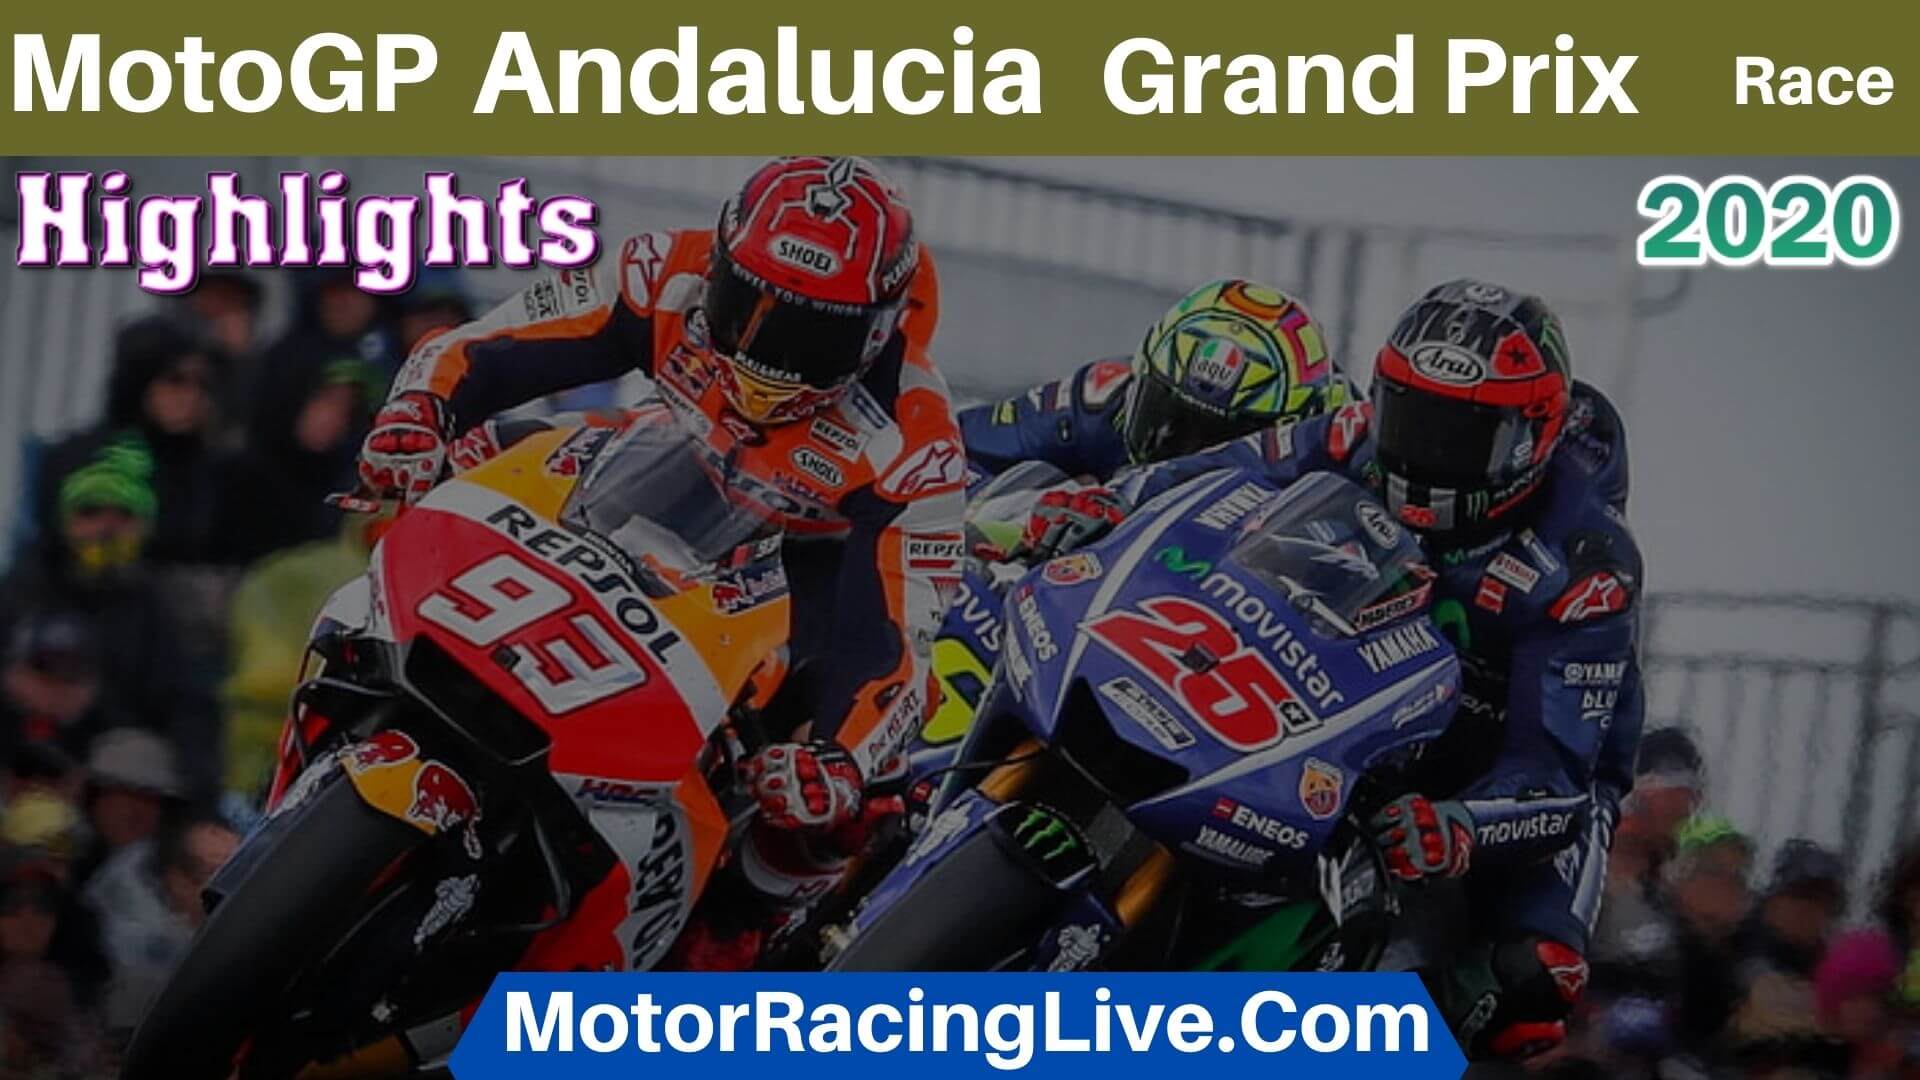 MotoGP Andalucia Grand Prix Highlights 2020